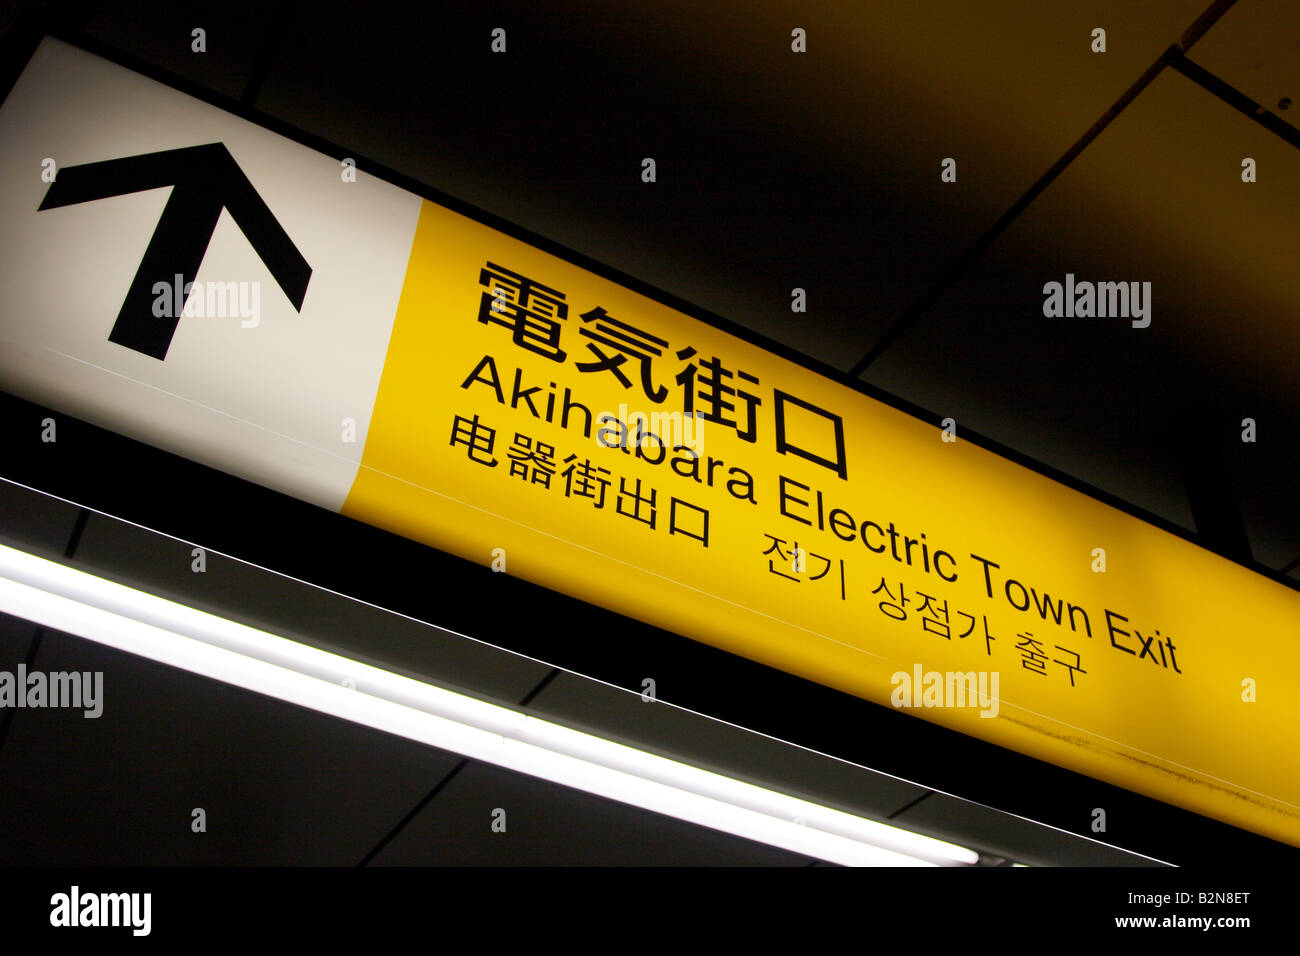 Sign for 'Electric Town' at Akihabara railway station, Tokyo, Japan Stock Photo